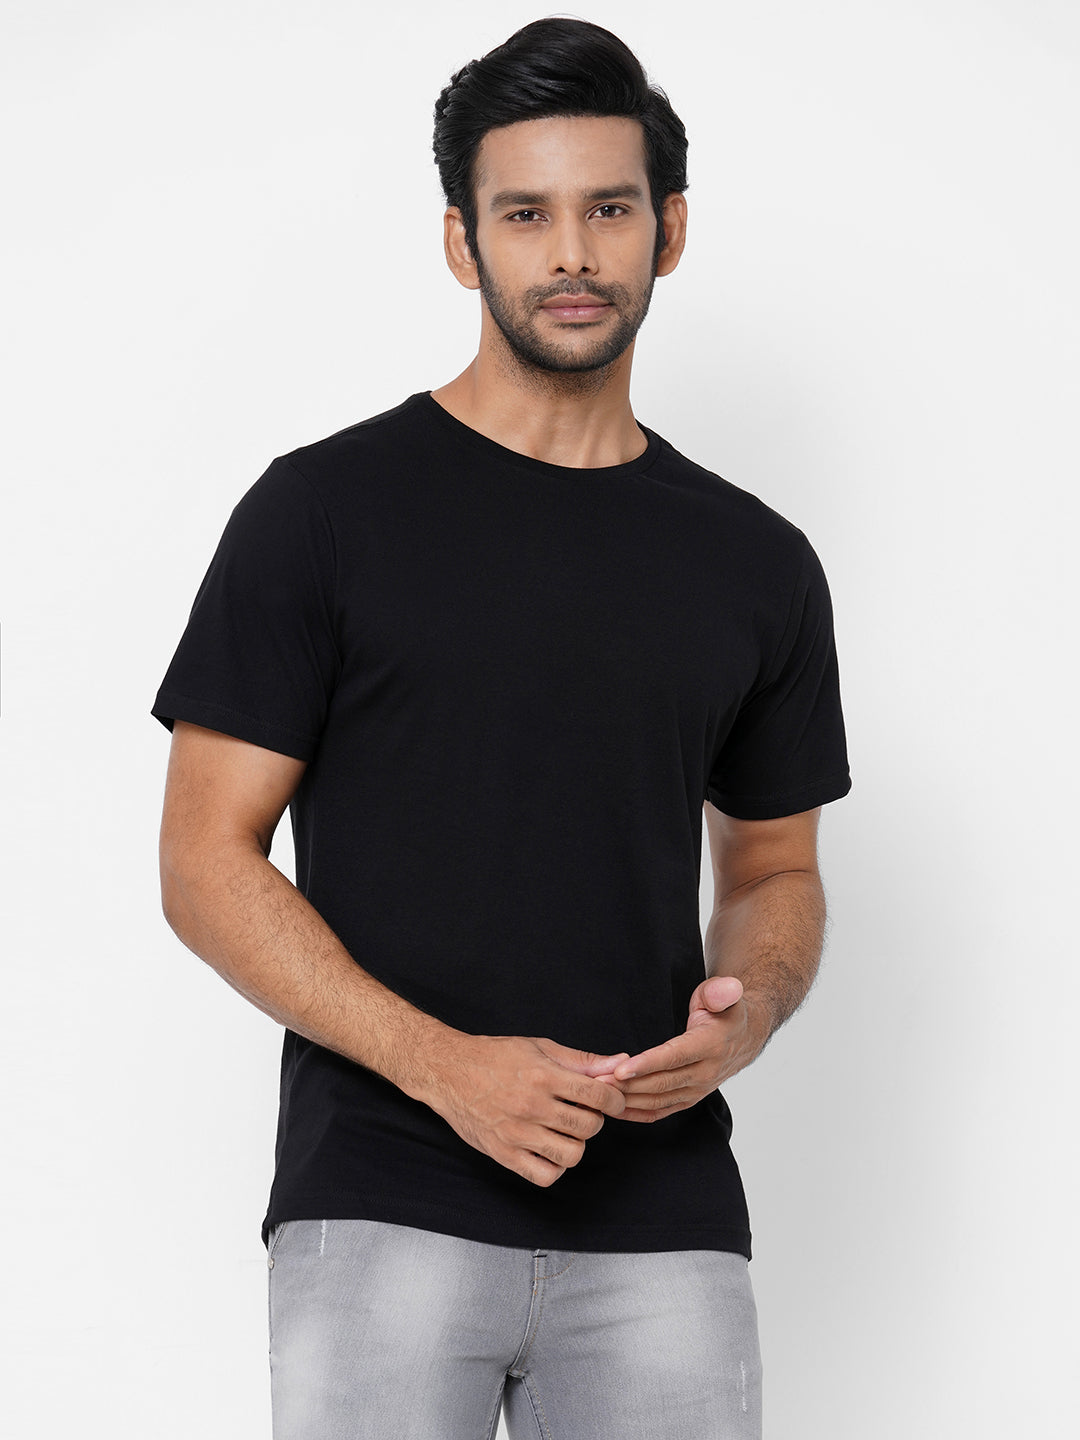 Men's Black Cotton Regular Fit Tshirt